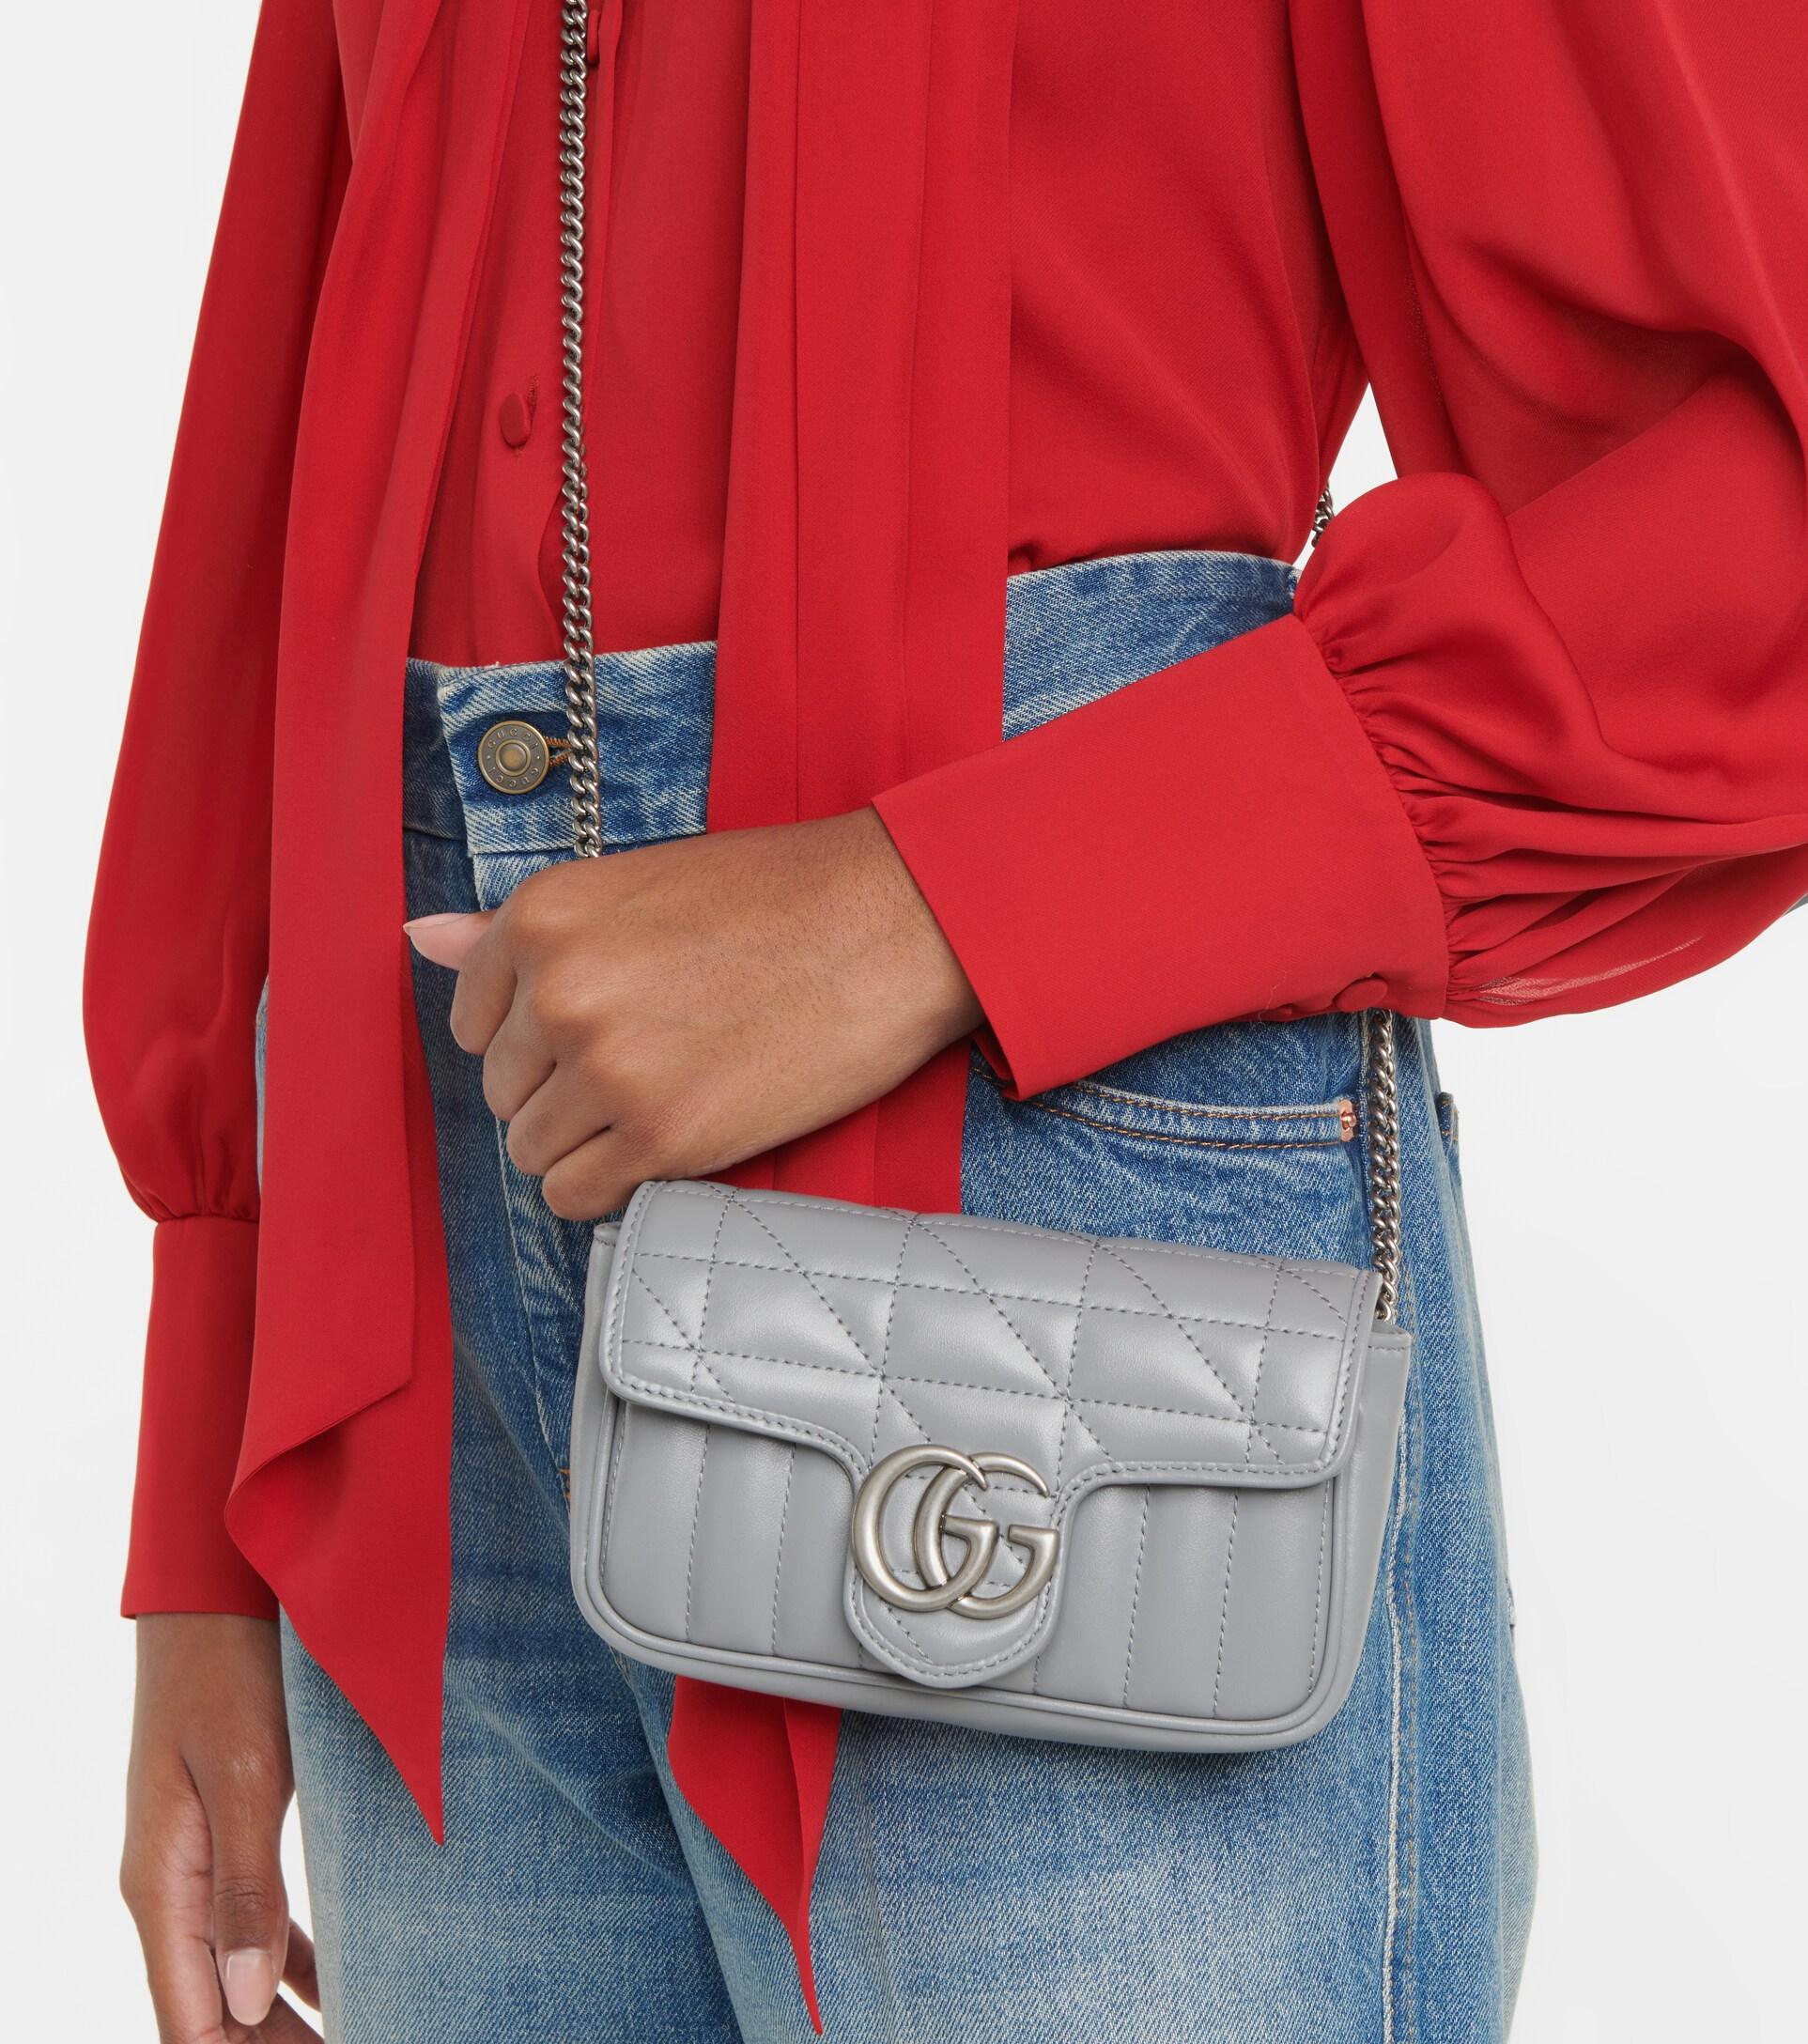 Gucci GG Marmont Super Mini Leather Shoulder Bag in Gray